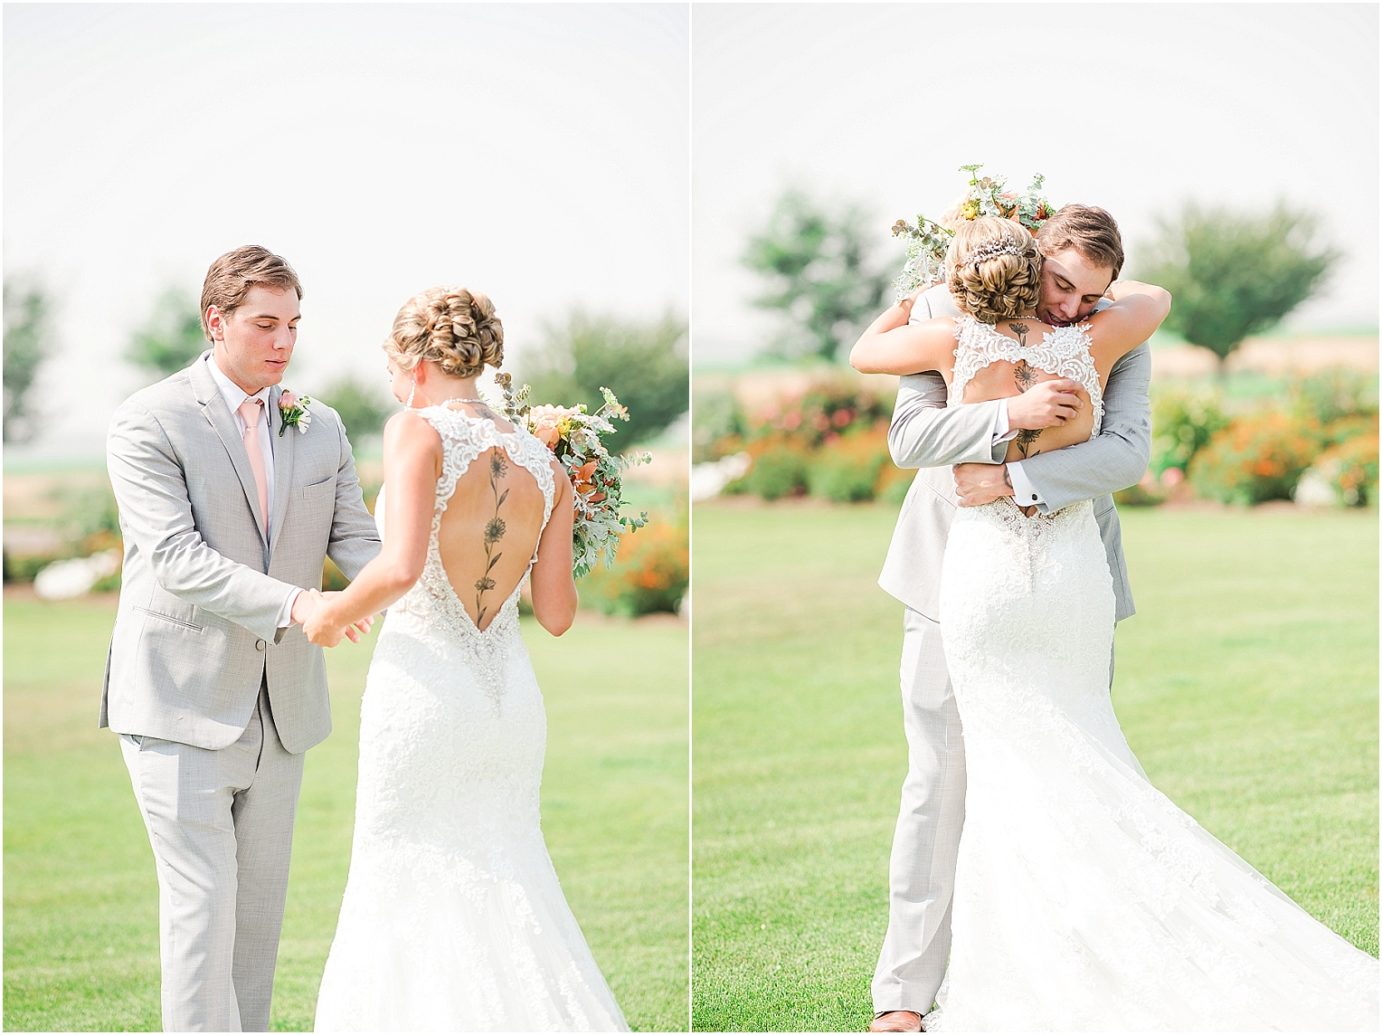 Romantic backyard wedding othello photographer Alix and Kylee first look